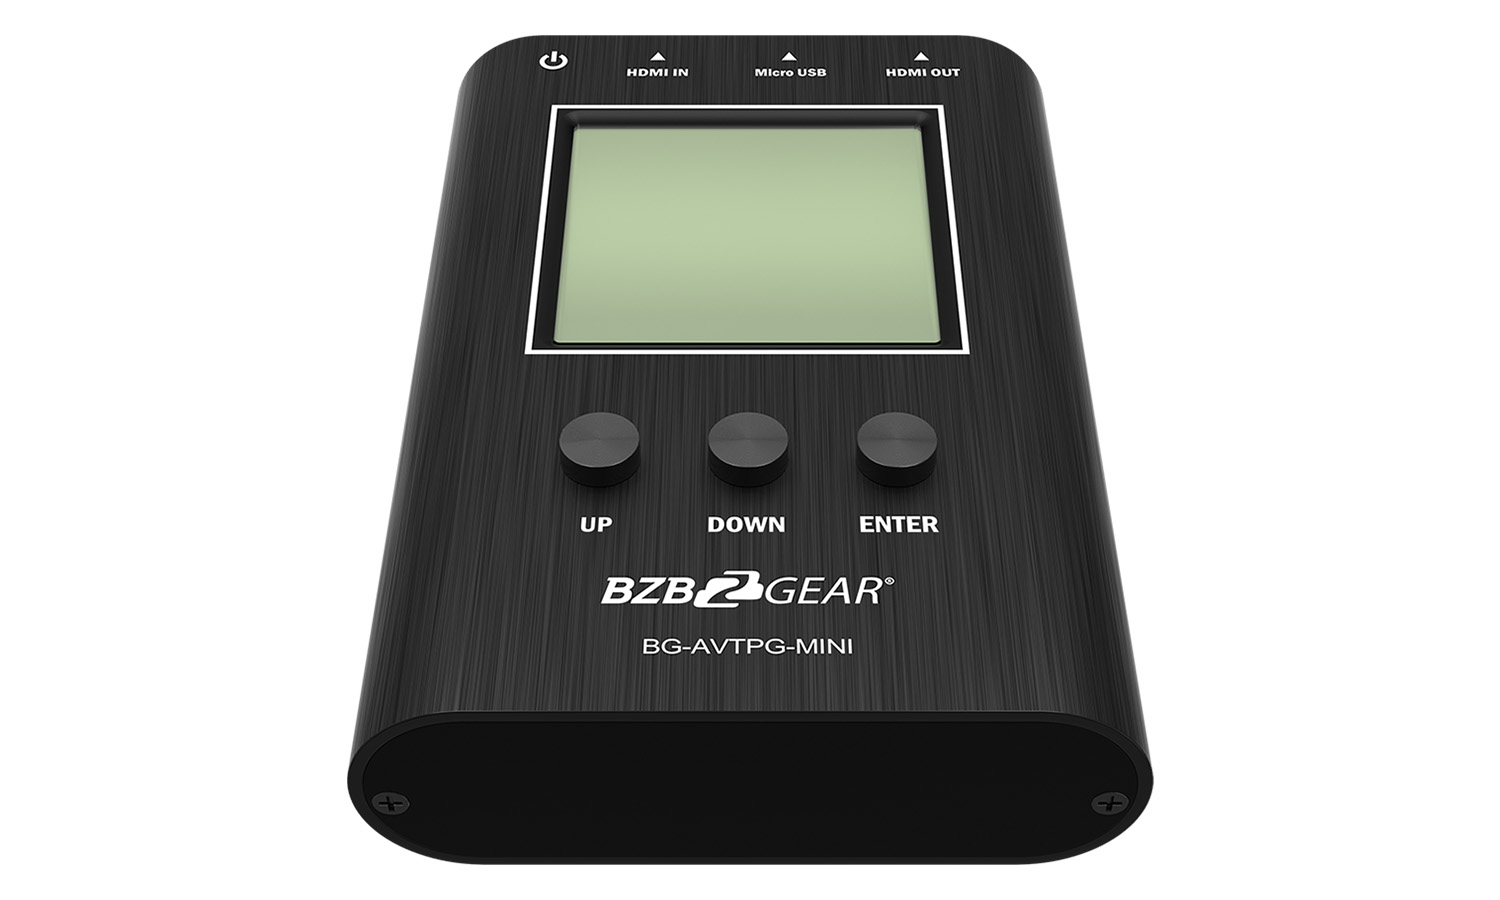 BG-AVTPG-MINI HDMI 2.0 Portable Signal Test Generator and Analyzer by BZBGEAR